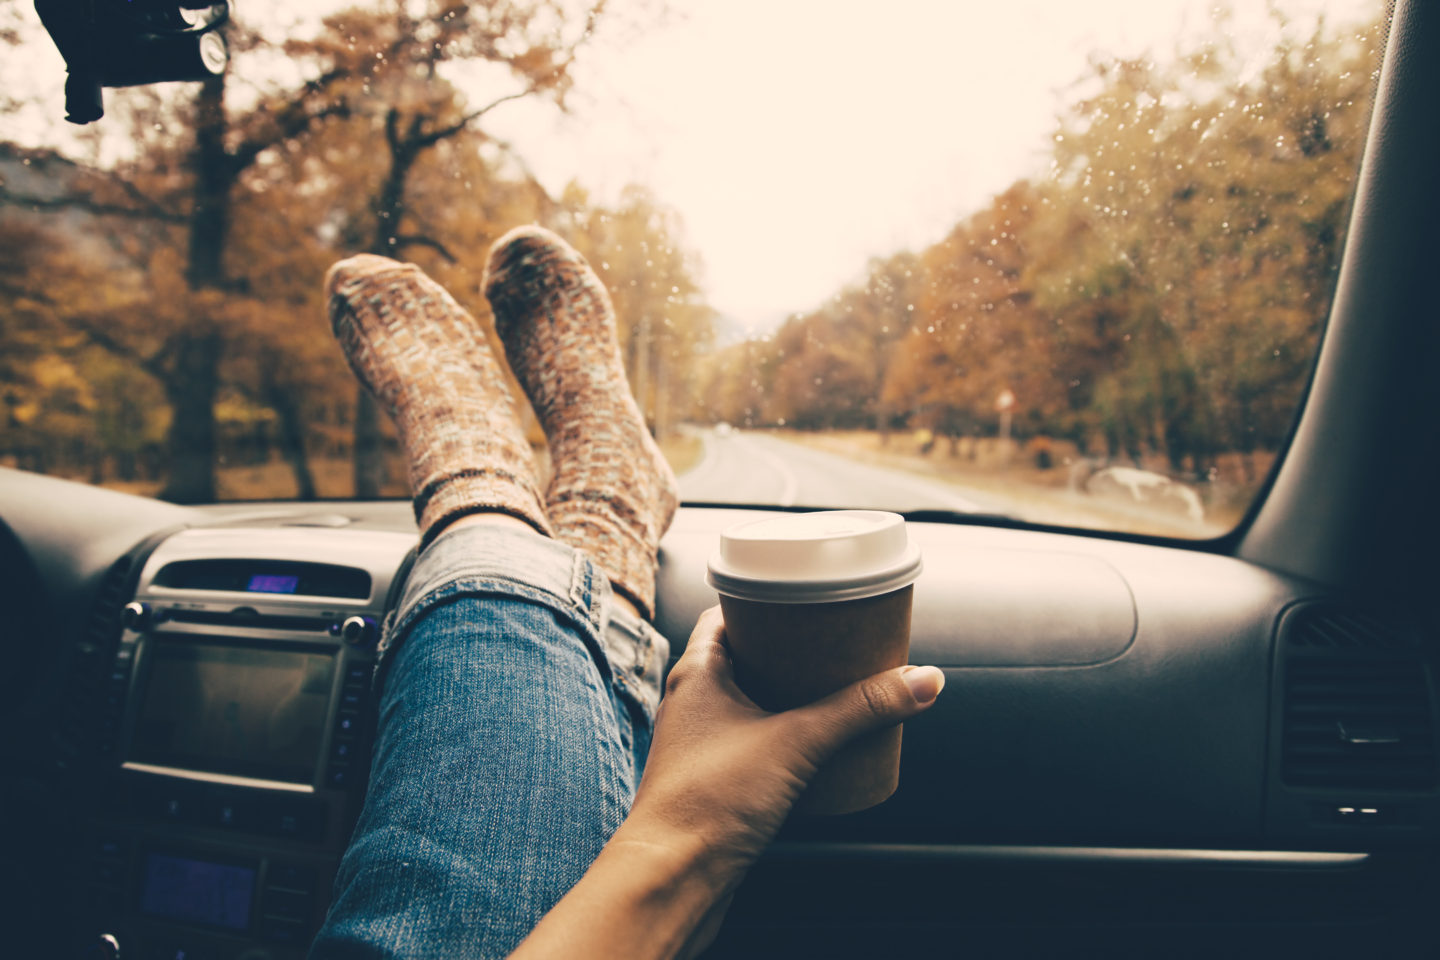 oman feet in warm socks on car dashboard with coffee in hand